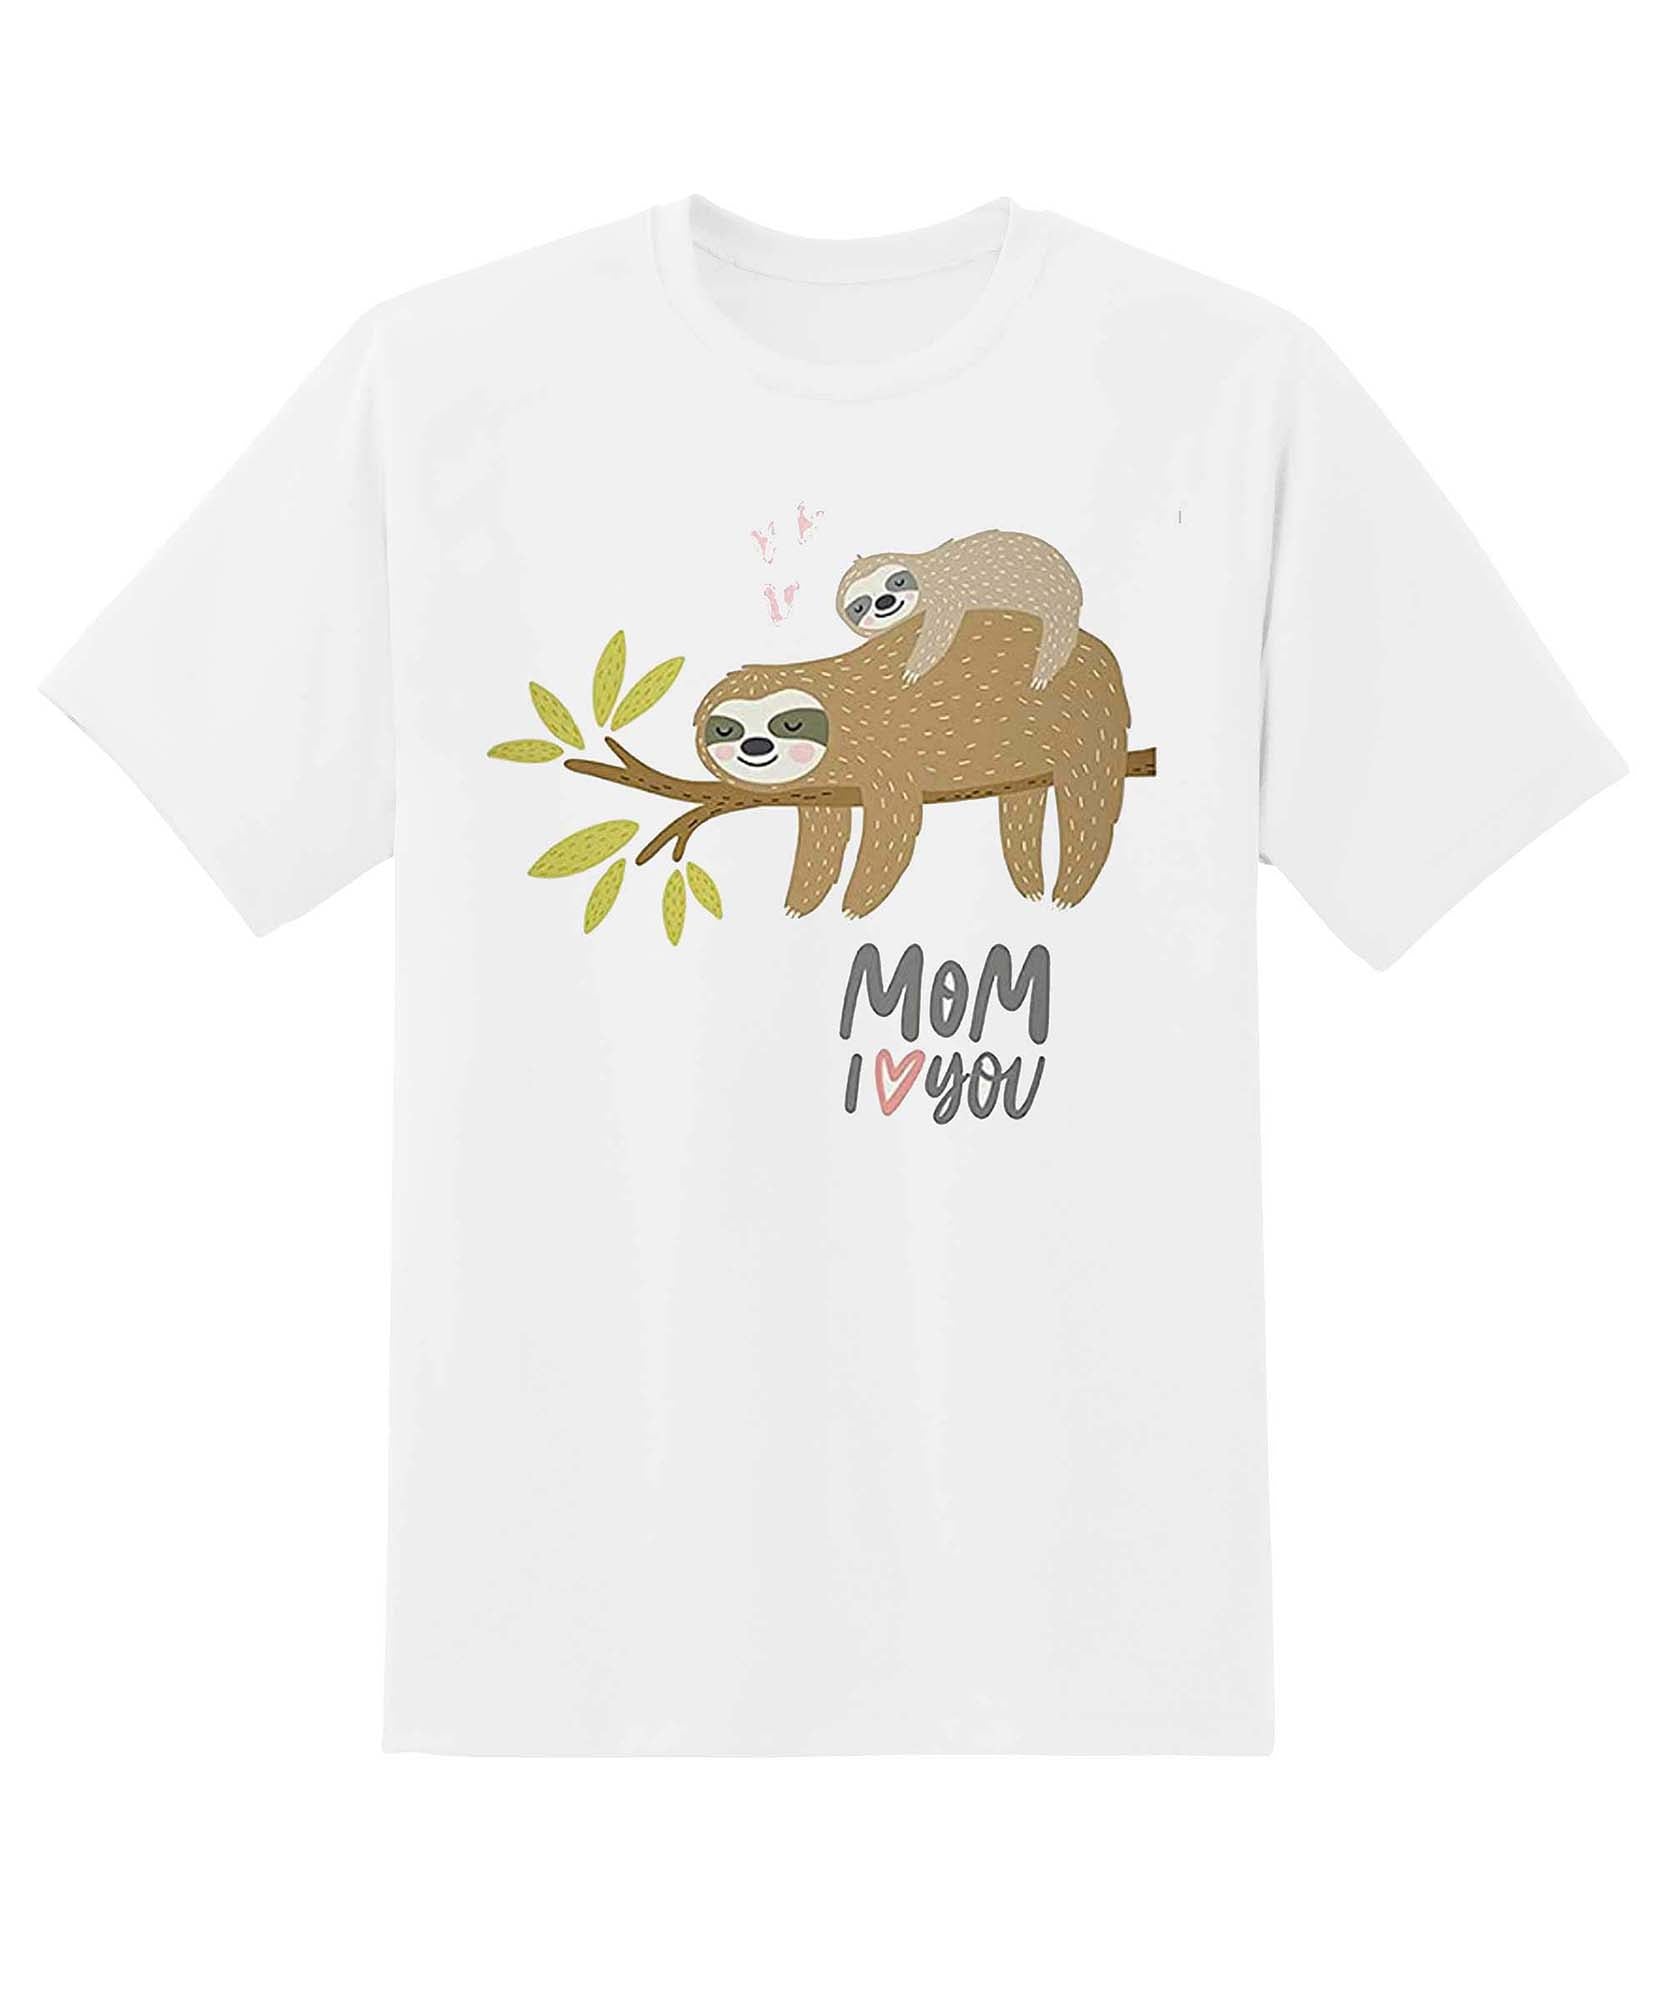 Skitongift Sloth Mom I Love You Funny Shirts Hoodie Sweater Short Sleeve Casual Shirt